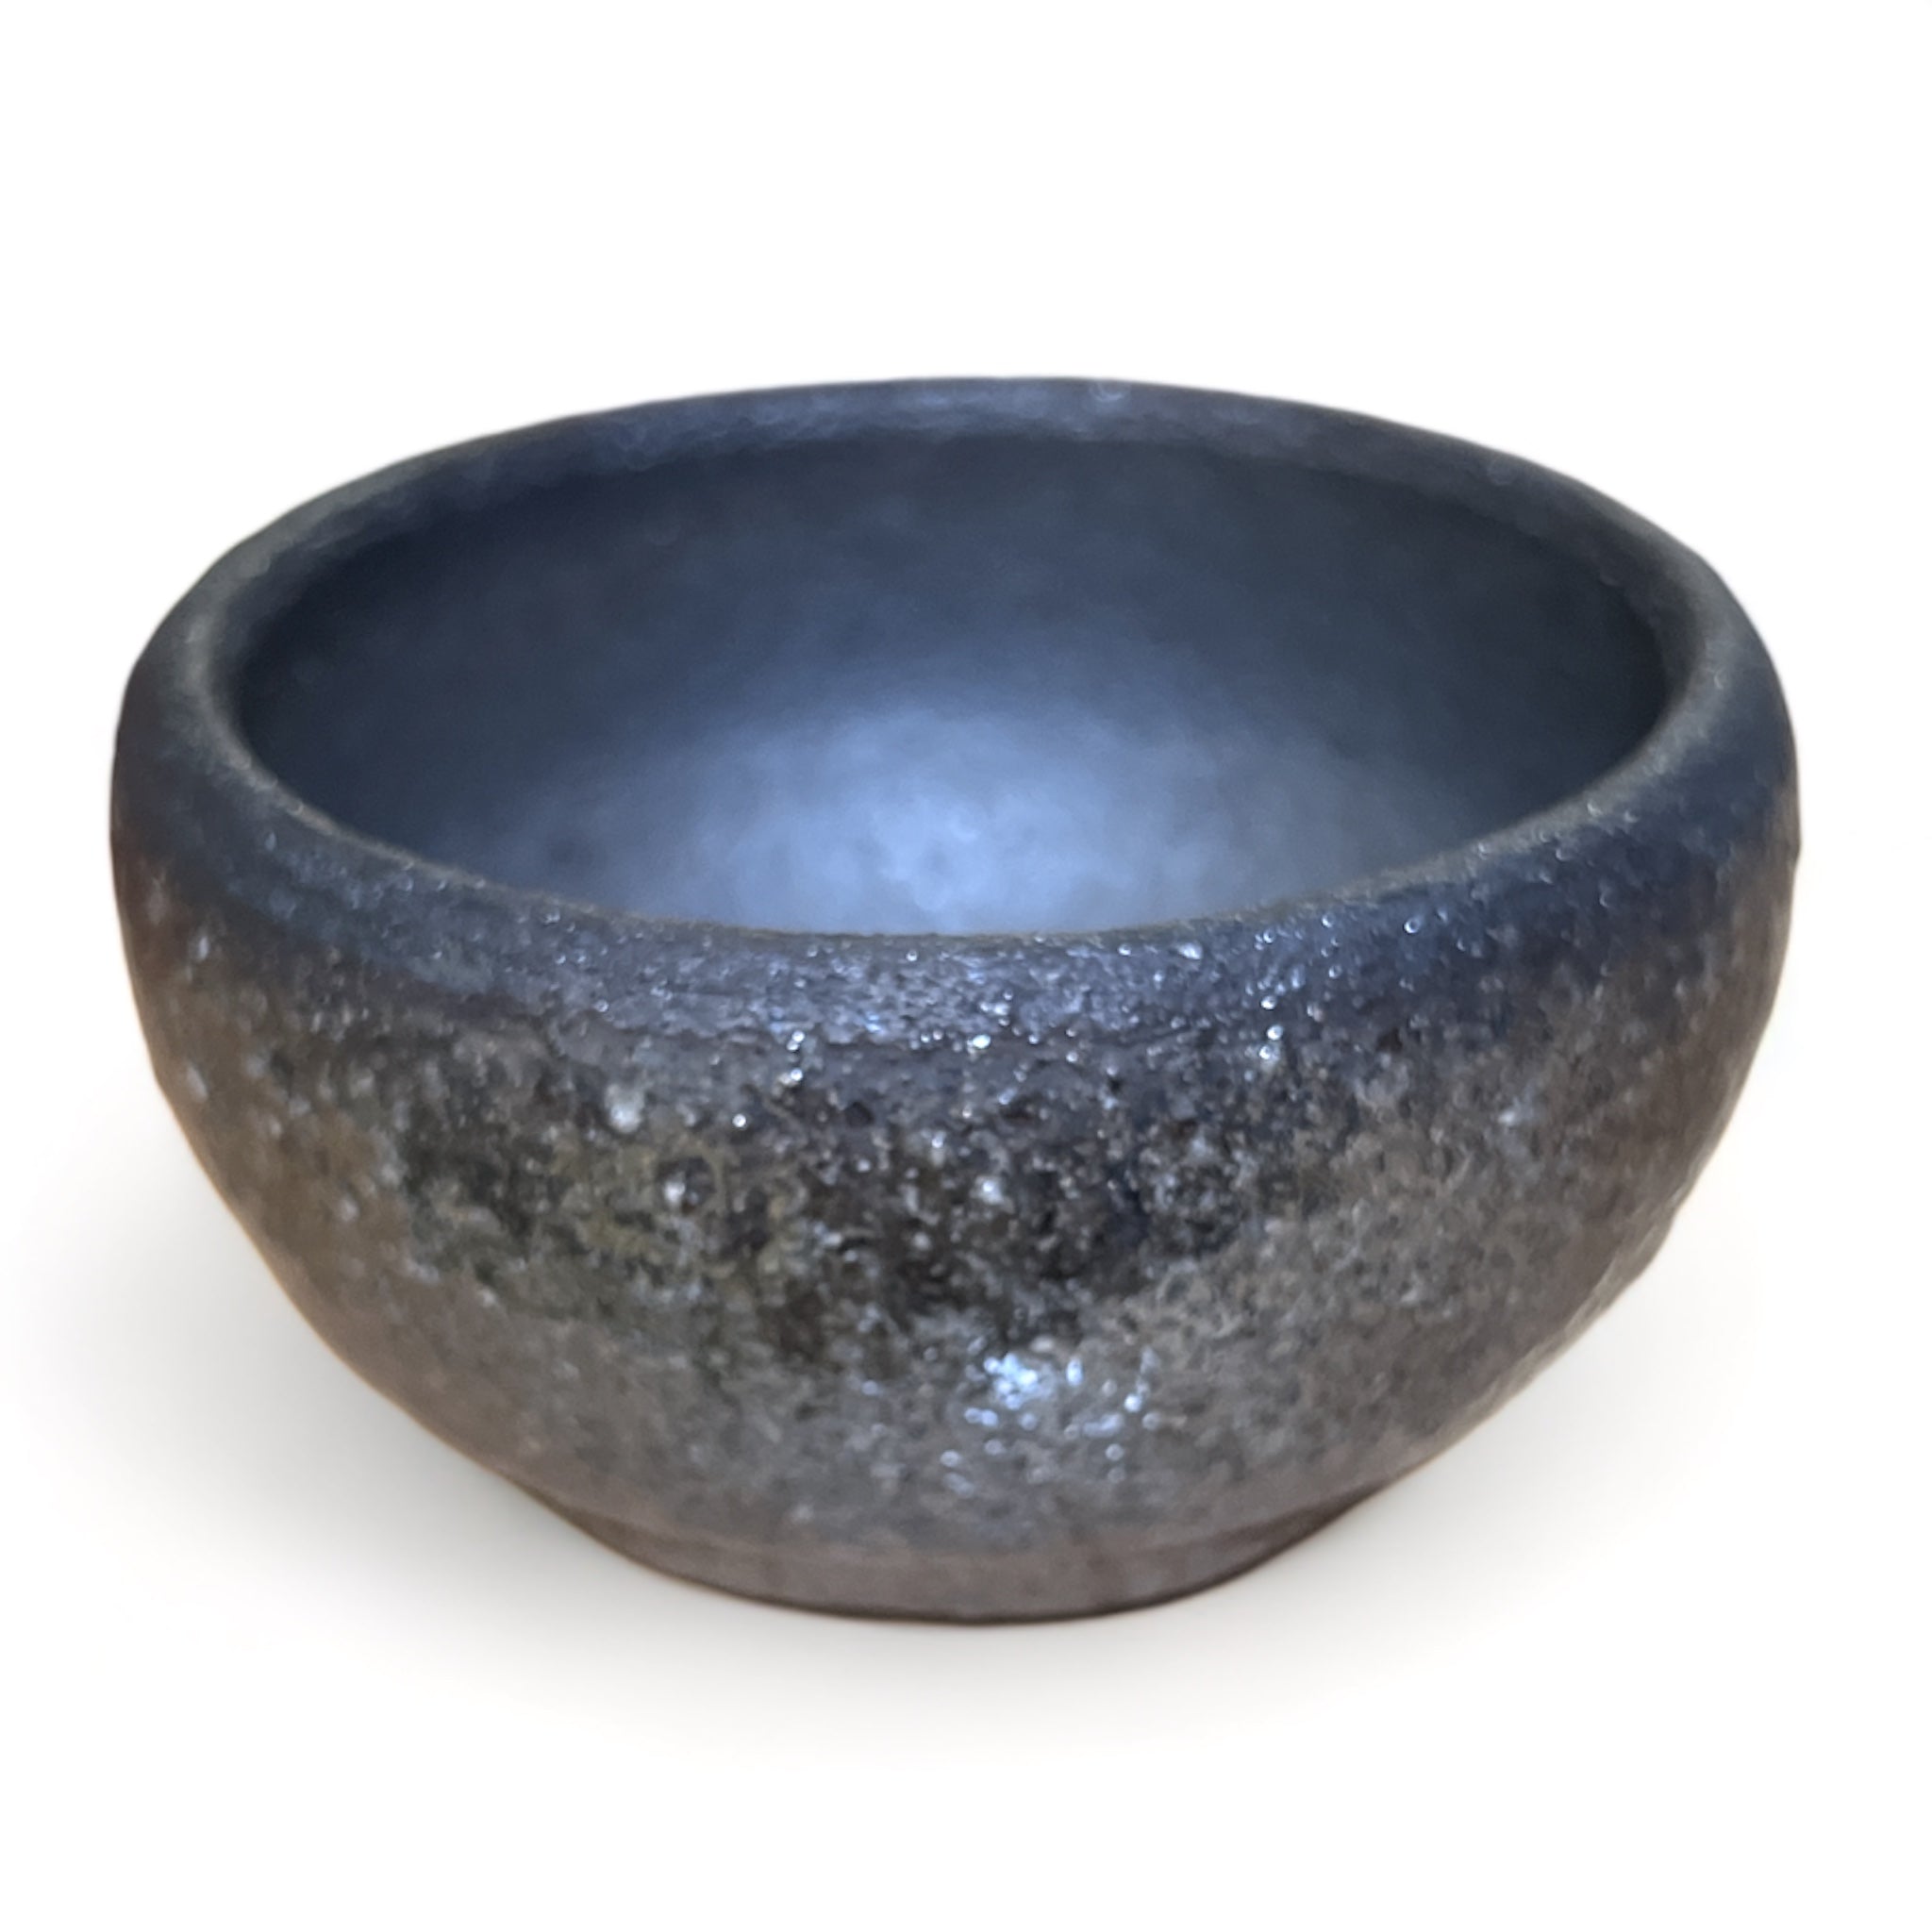 Taiwanese Handmade Wood-Fired Ceramic Teacup - Cosmic Slate